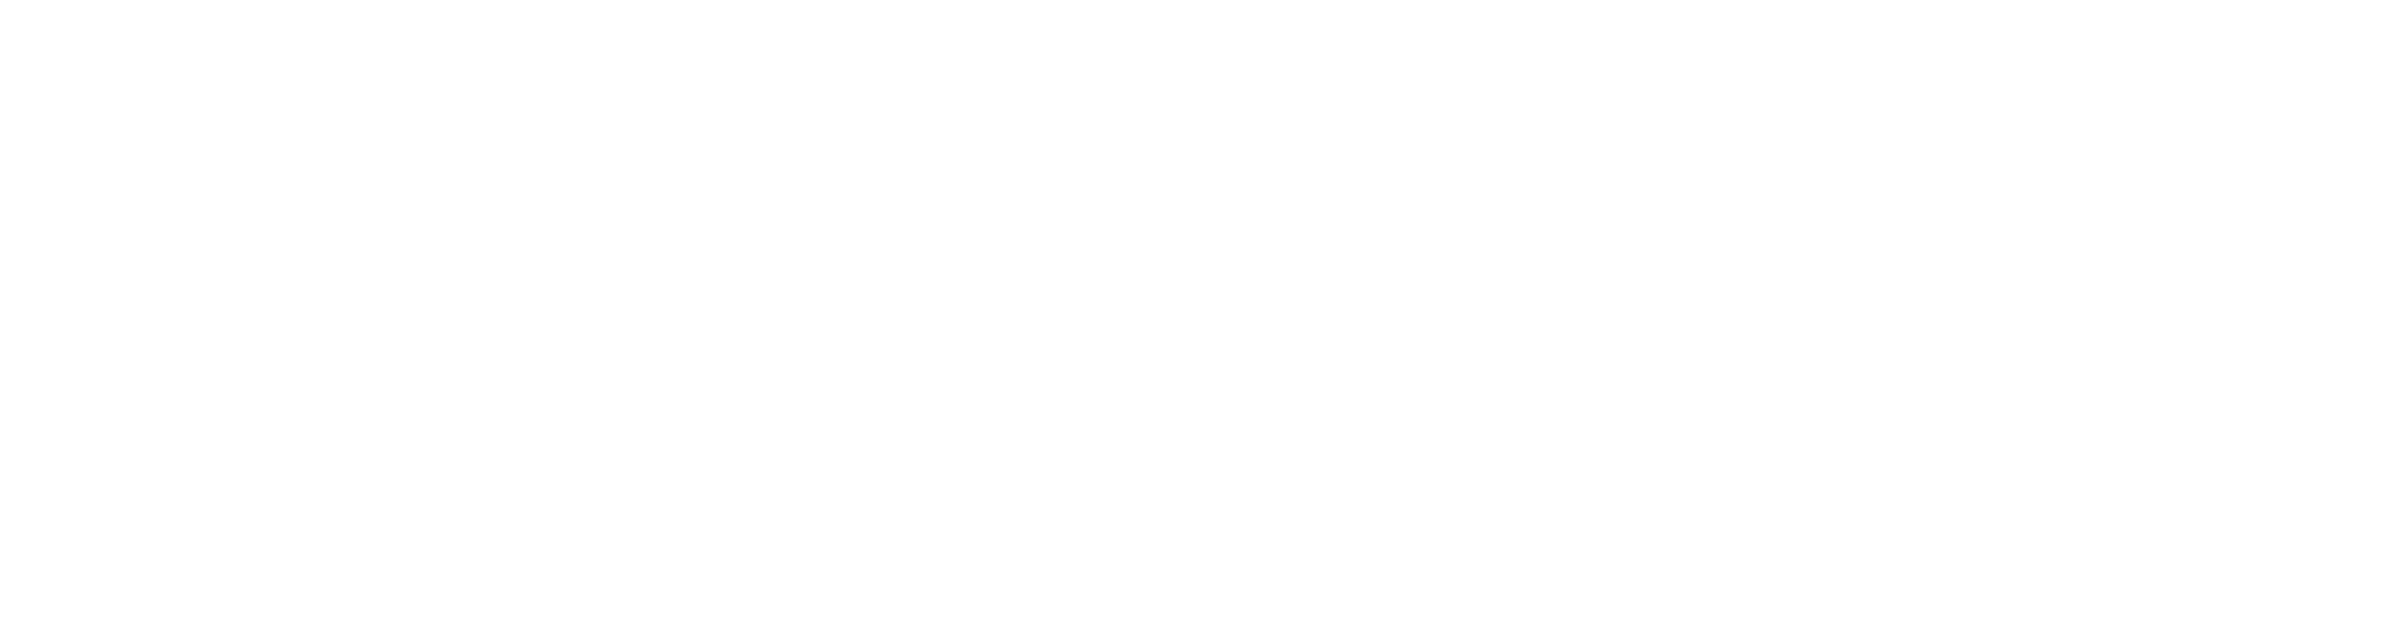 forbes-logo-black-transparentw